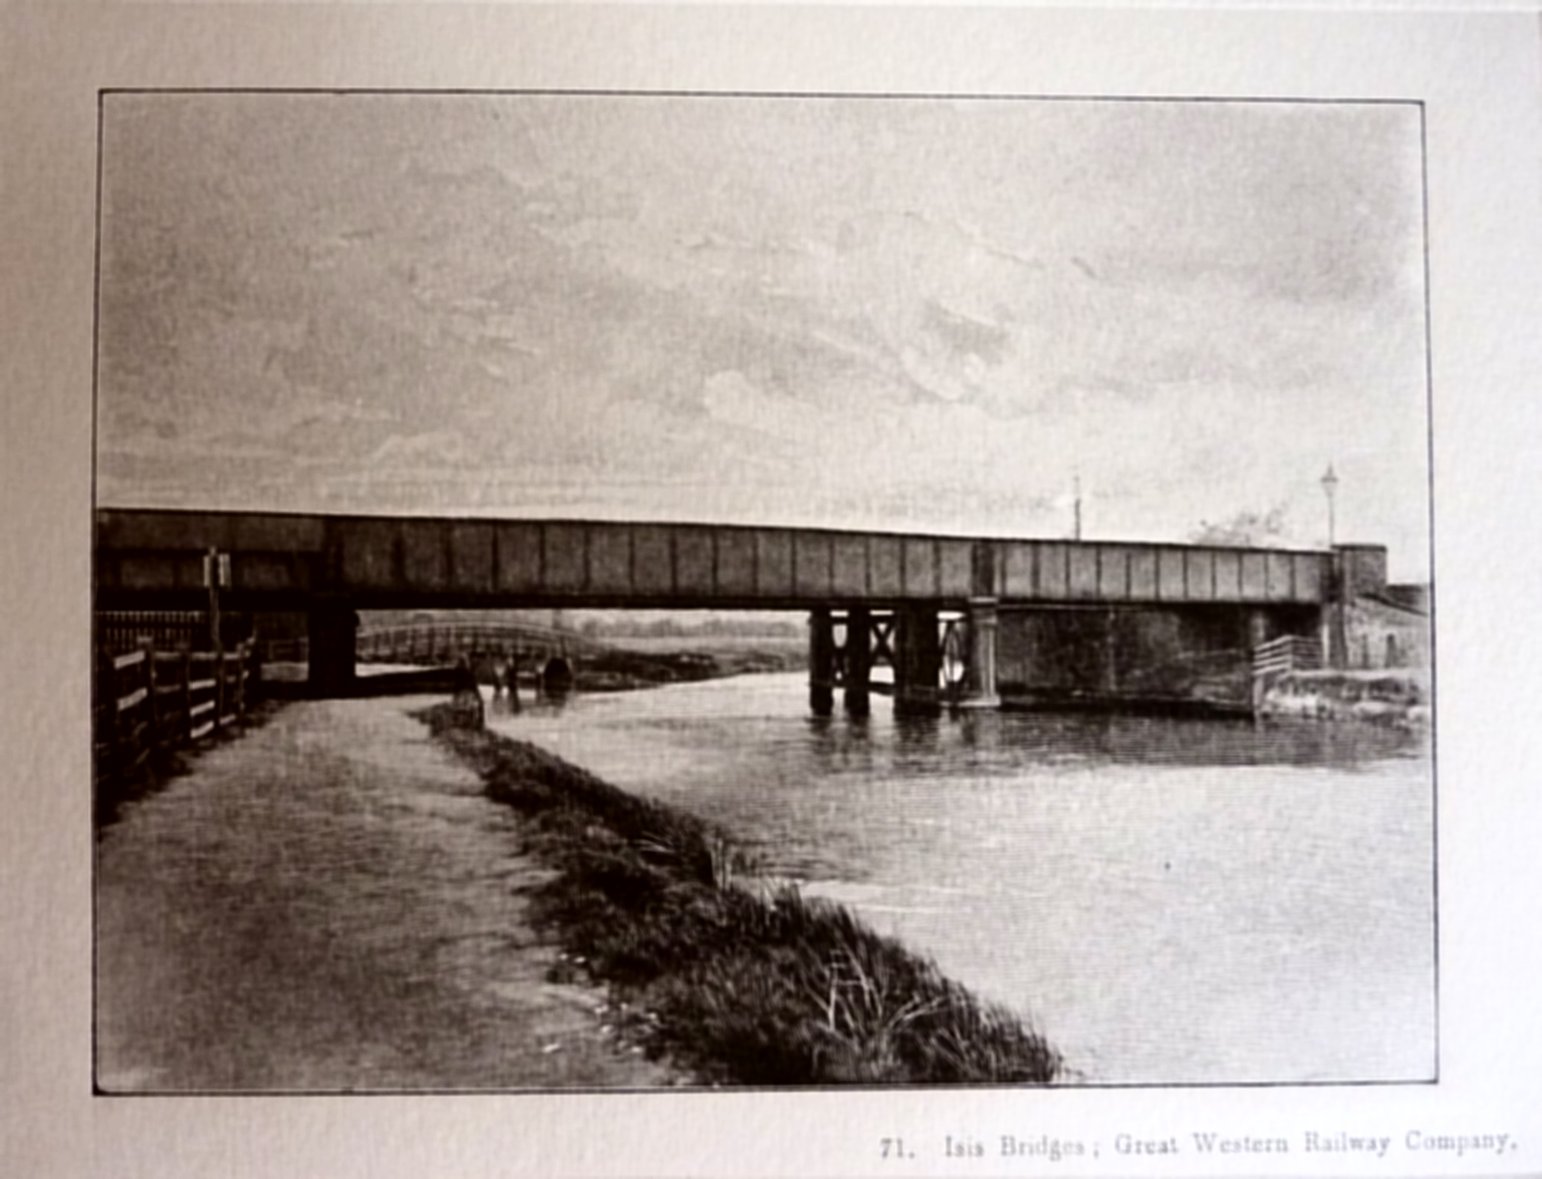 [GWR Isis Bridge for gasworks spur Dredge 1897]